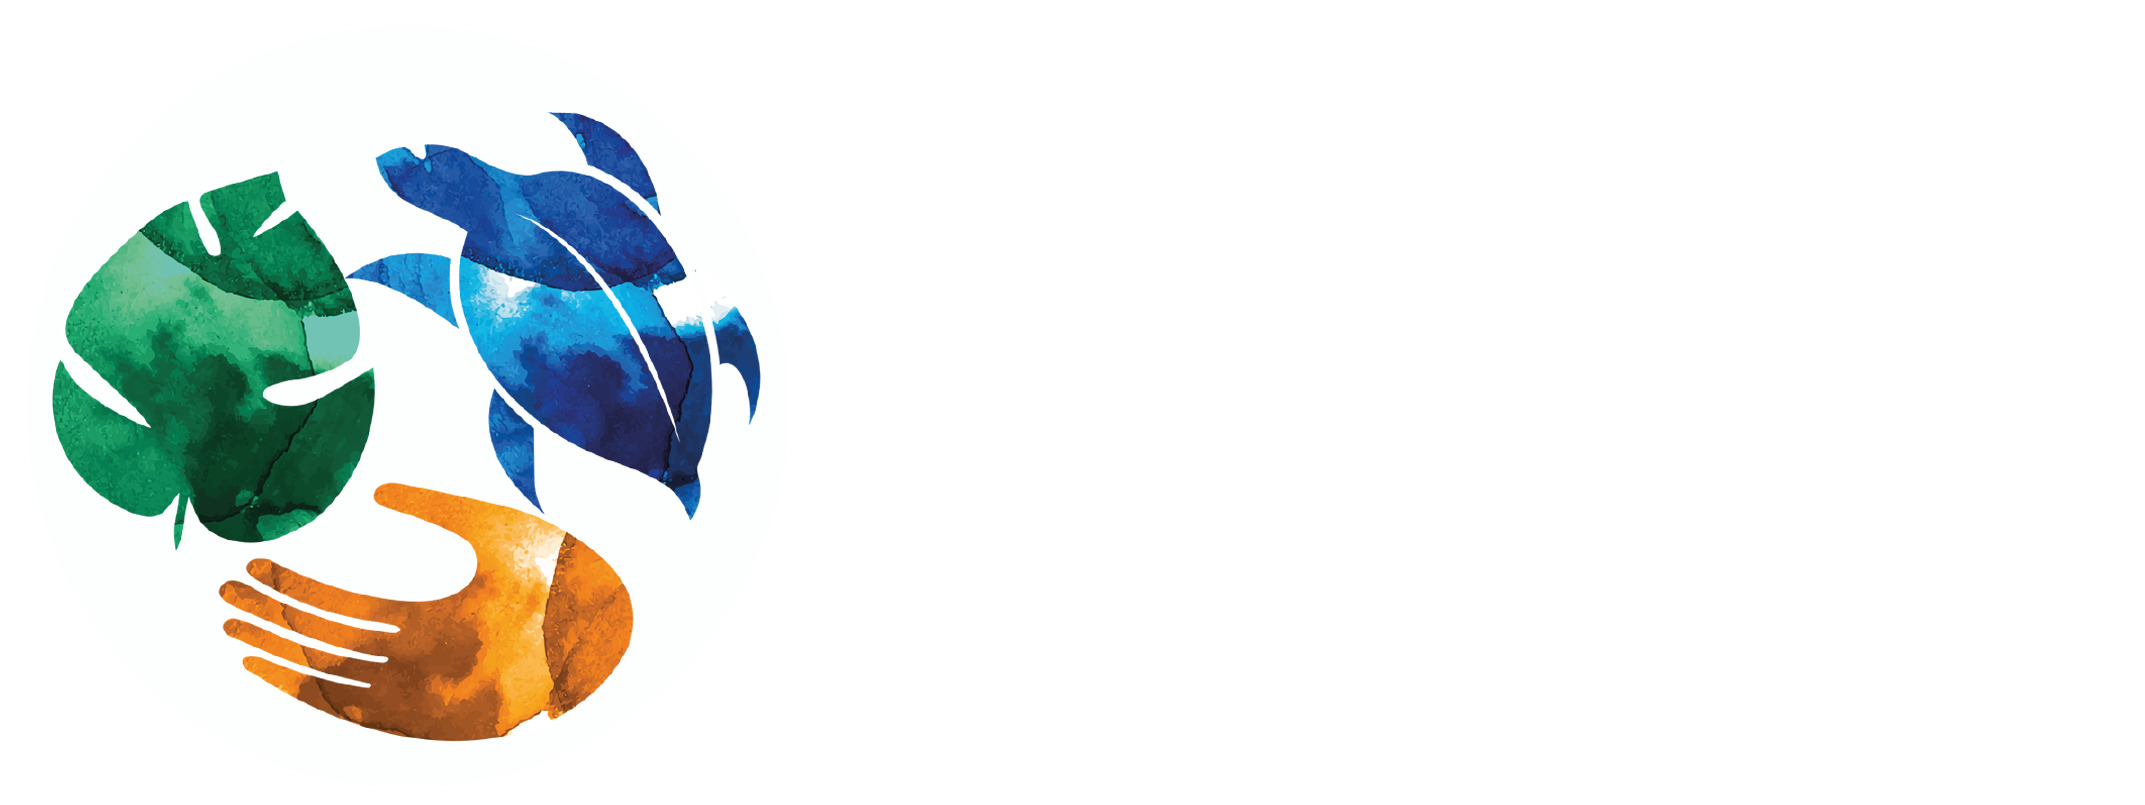 ANAMBAS FOUNDATION